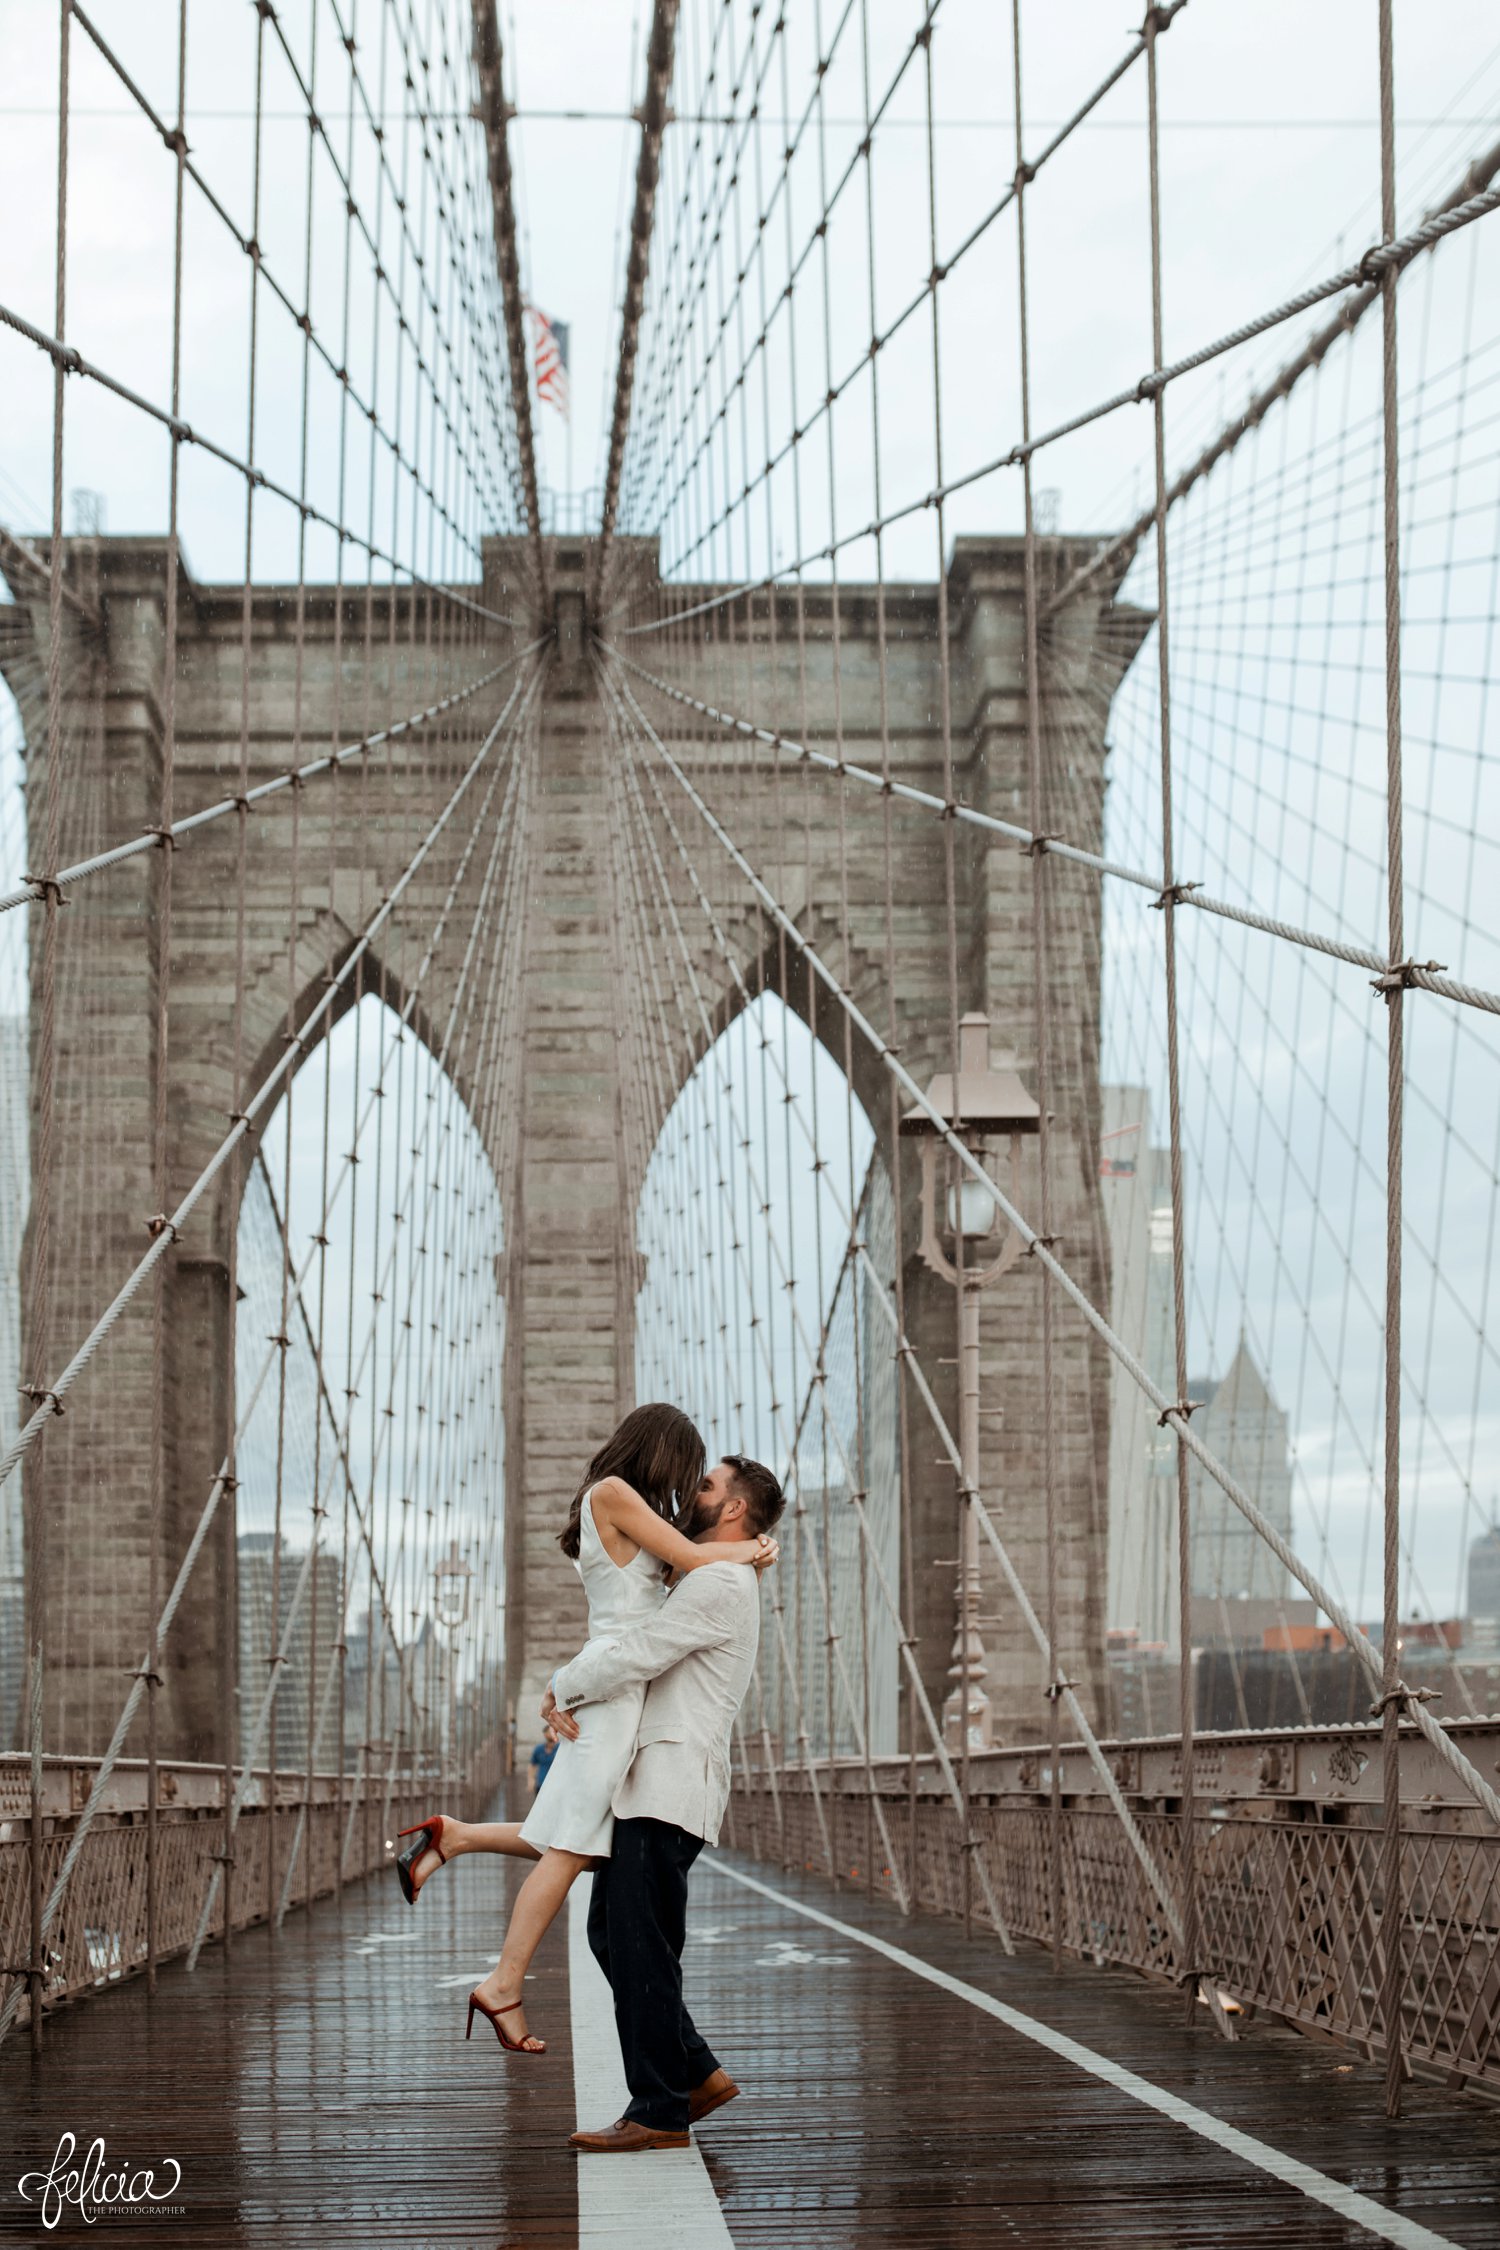 images by feliciathephotographer.com | destination wedding photographer | elopement | new york city | second look | brooklyn bridge | hand in hand | cowl neck dress | contrast | skyline | 